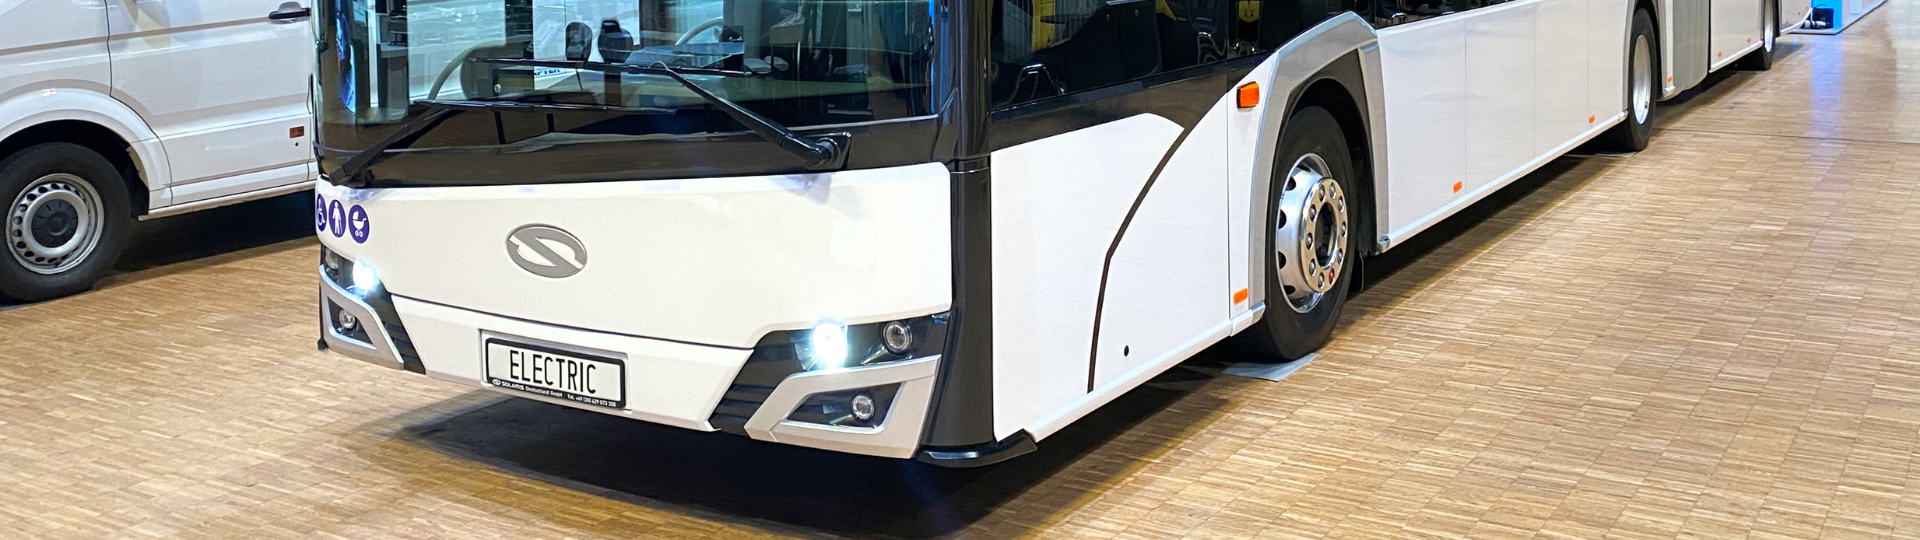 New version of the Urbino 18 electric bus at Elekbu 2023